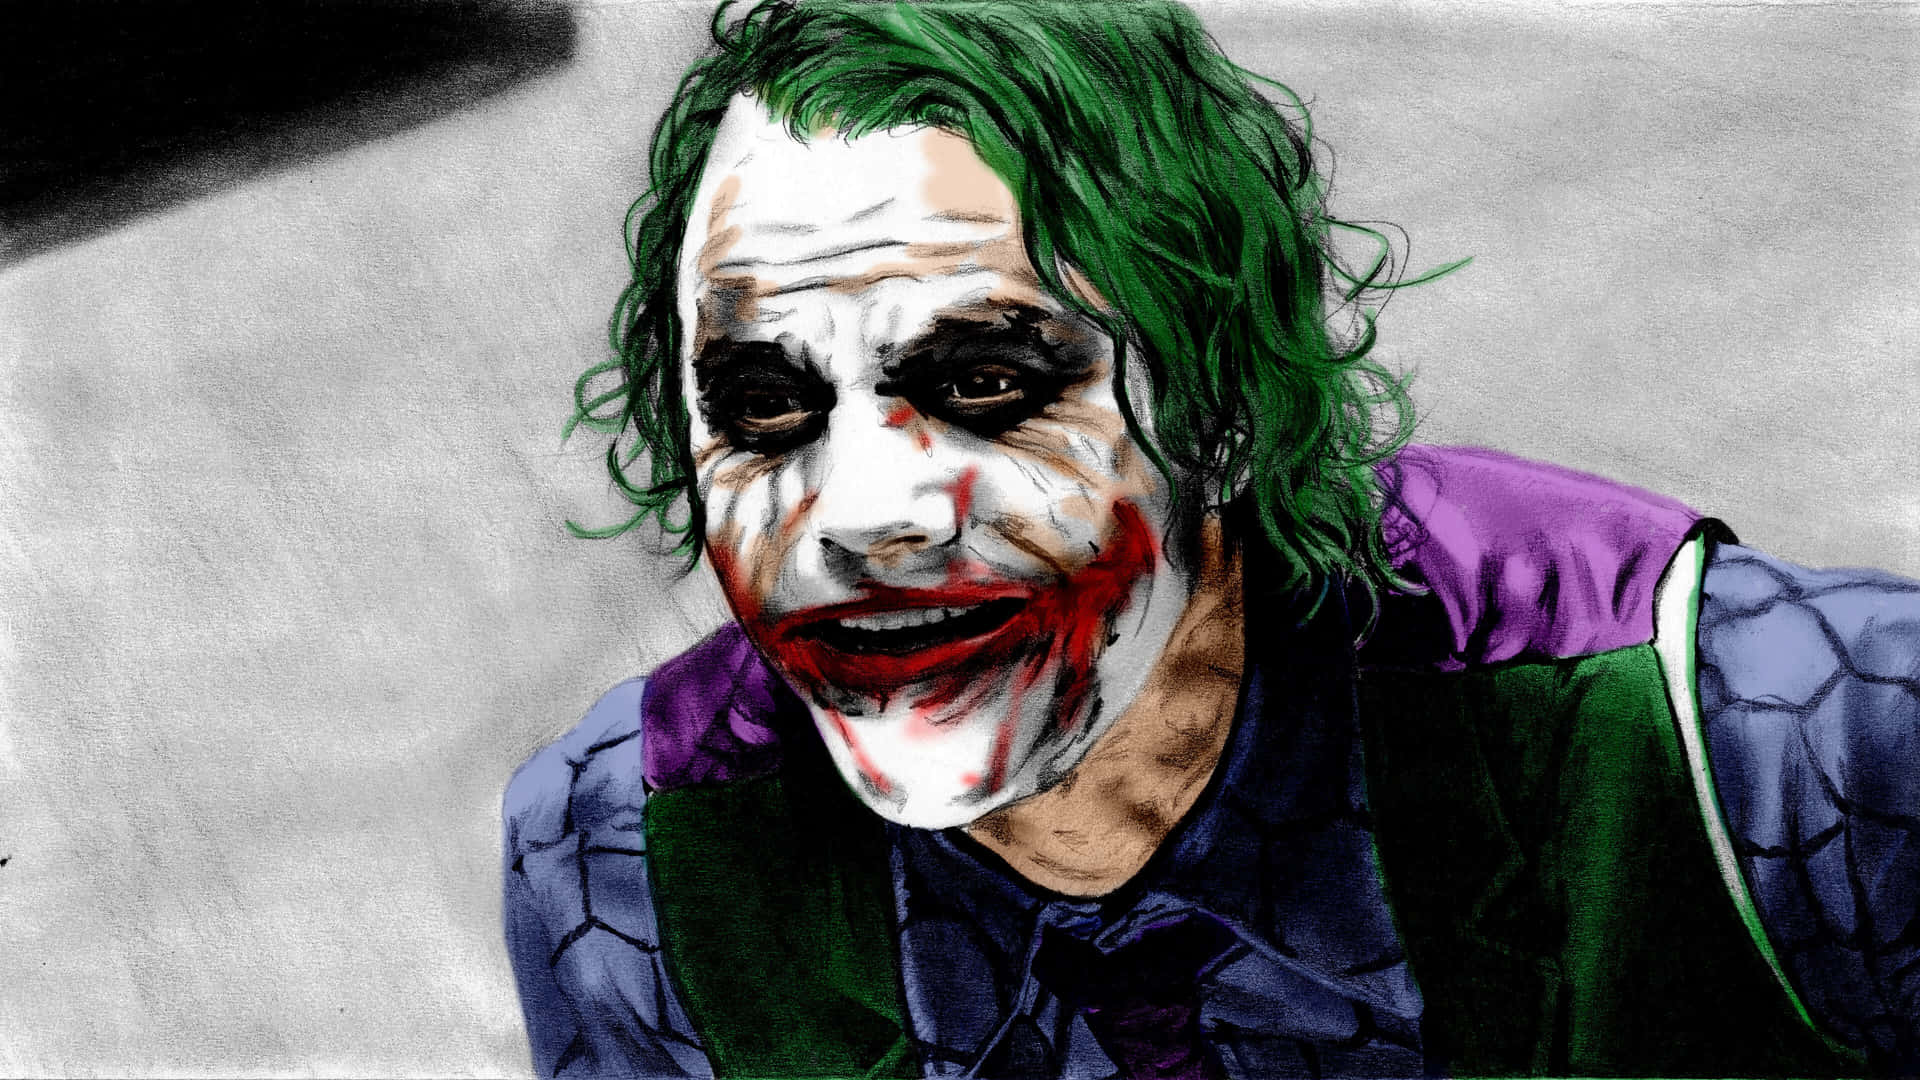 The Dark Knight Joker Preparing For His Latest Terror Attack Wallpaper